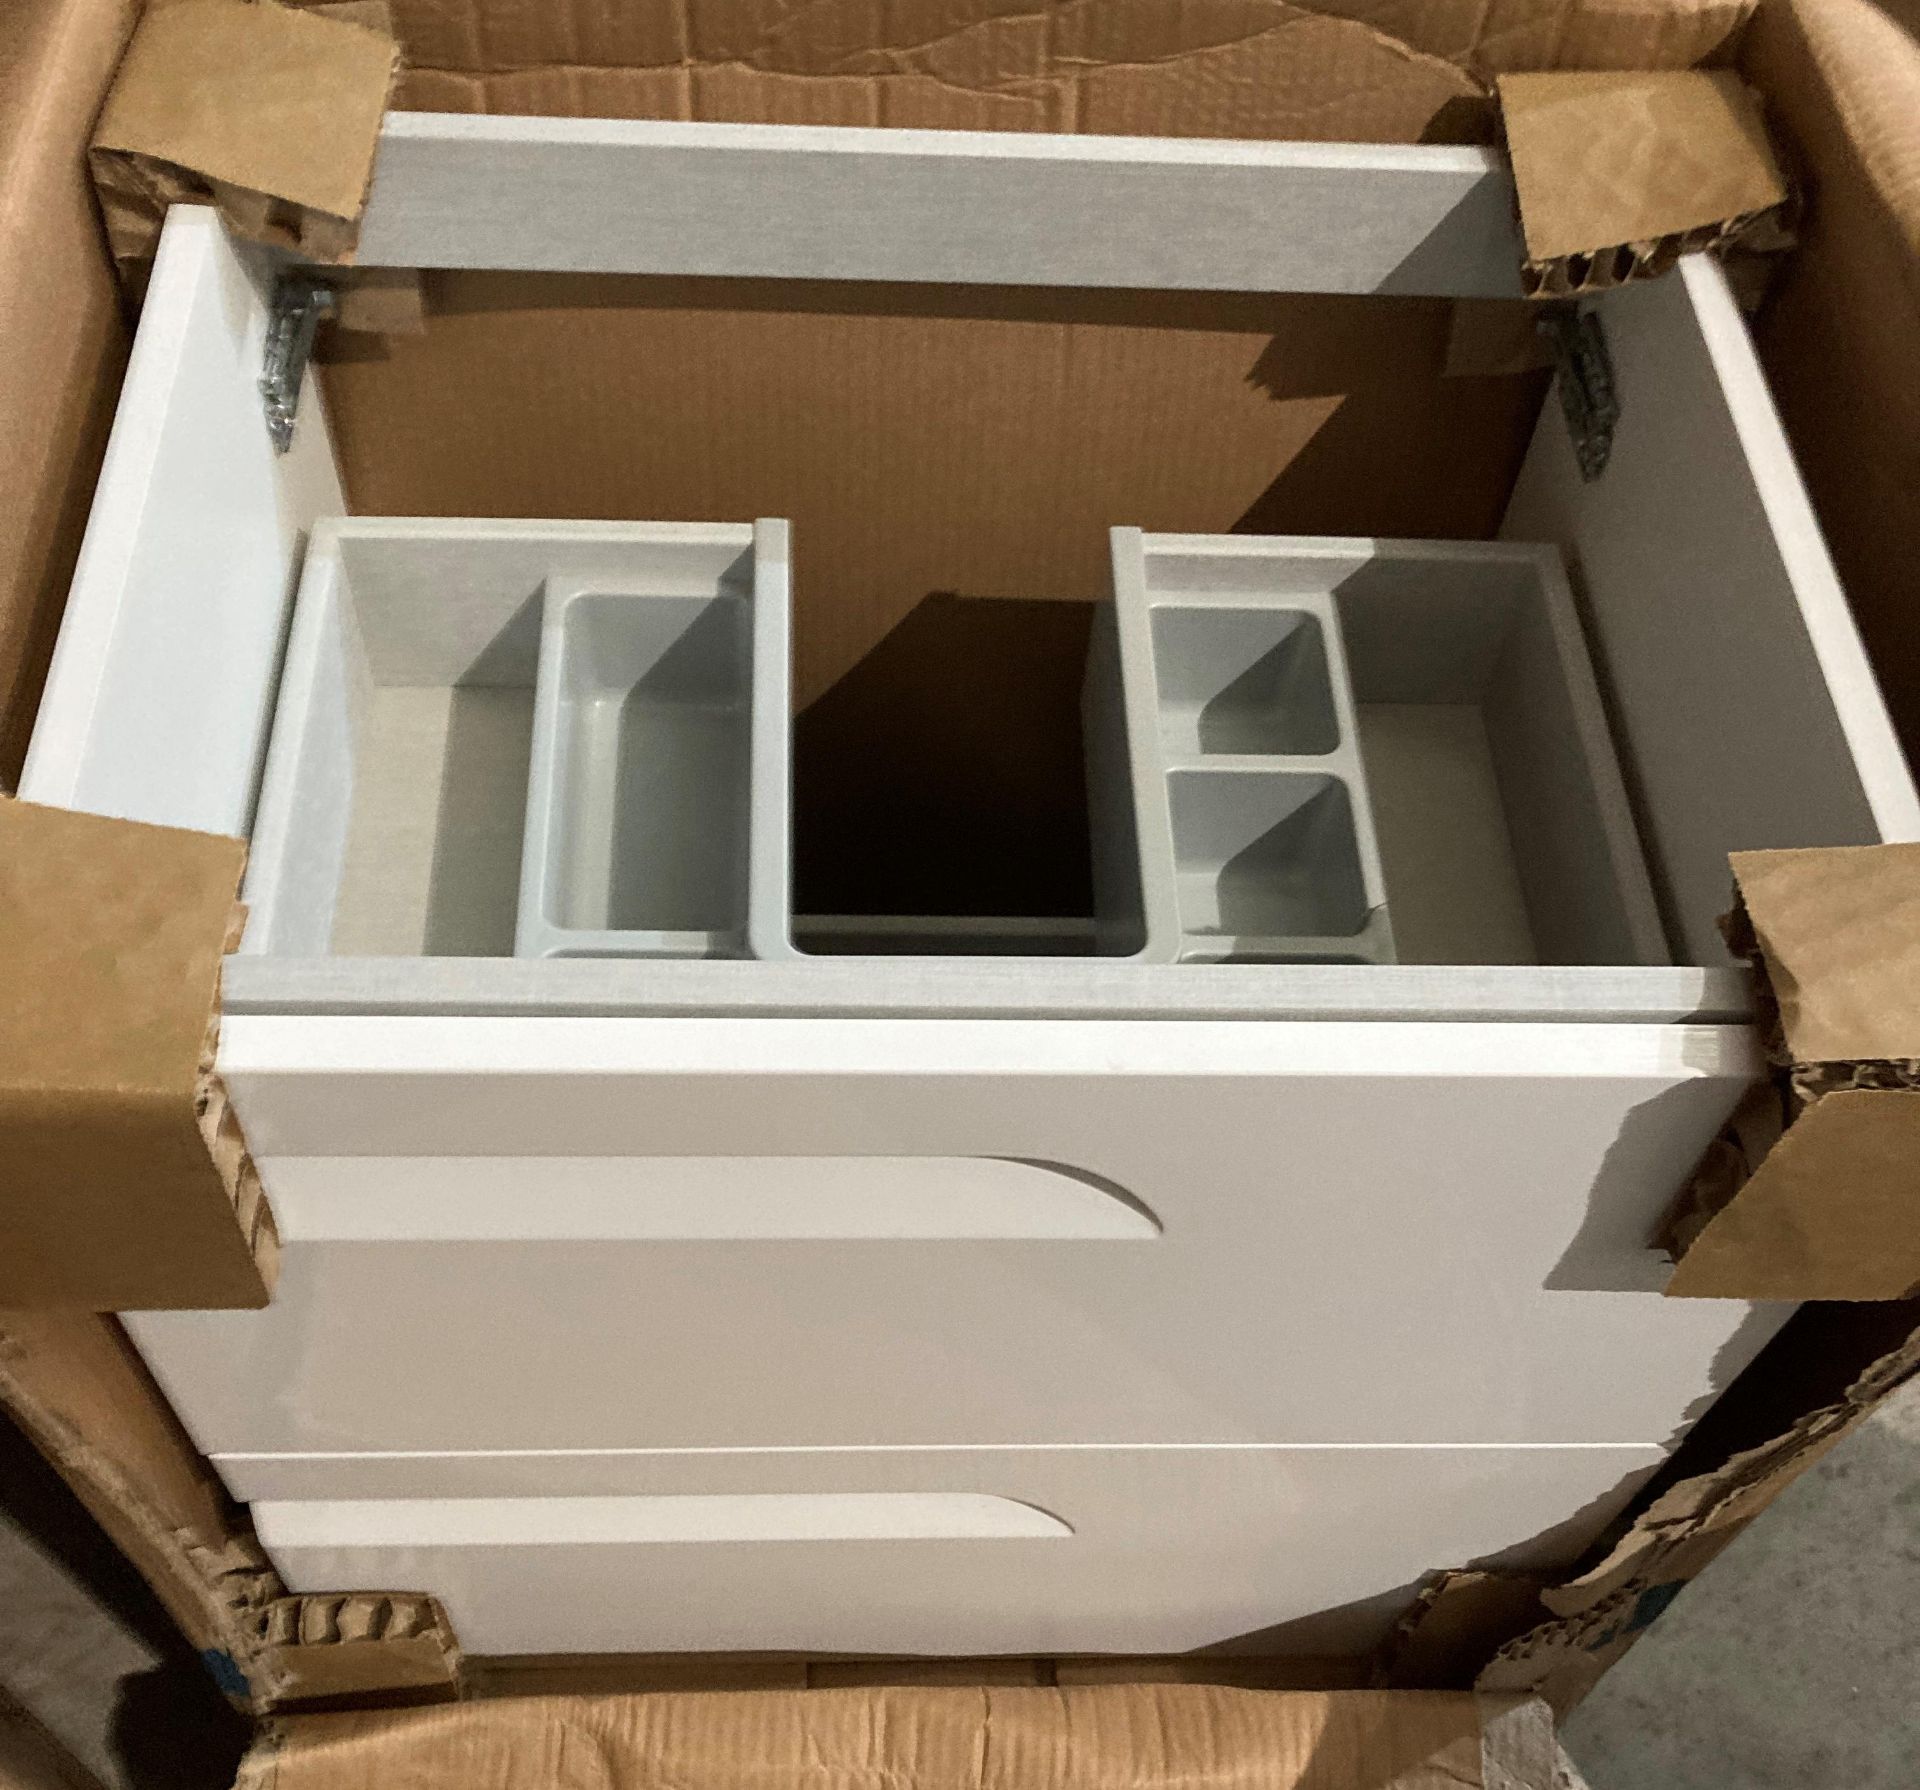 Tipo Royo 600mm 2 drawer wash basin unit in gloss white (saleroom location: MA1 RACK)